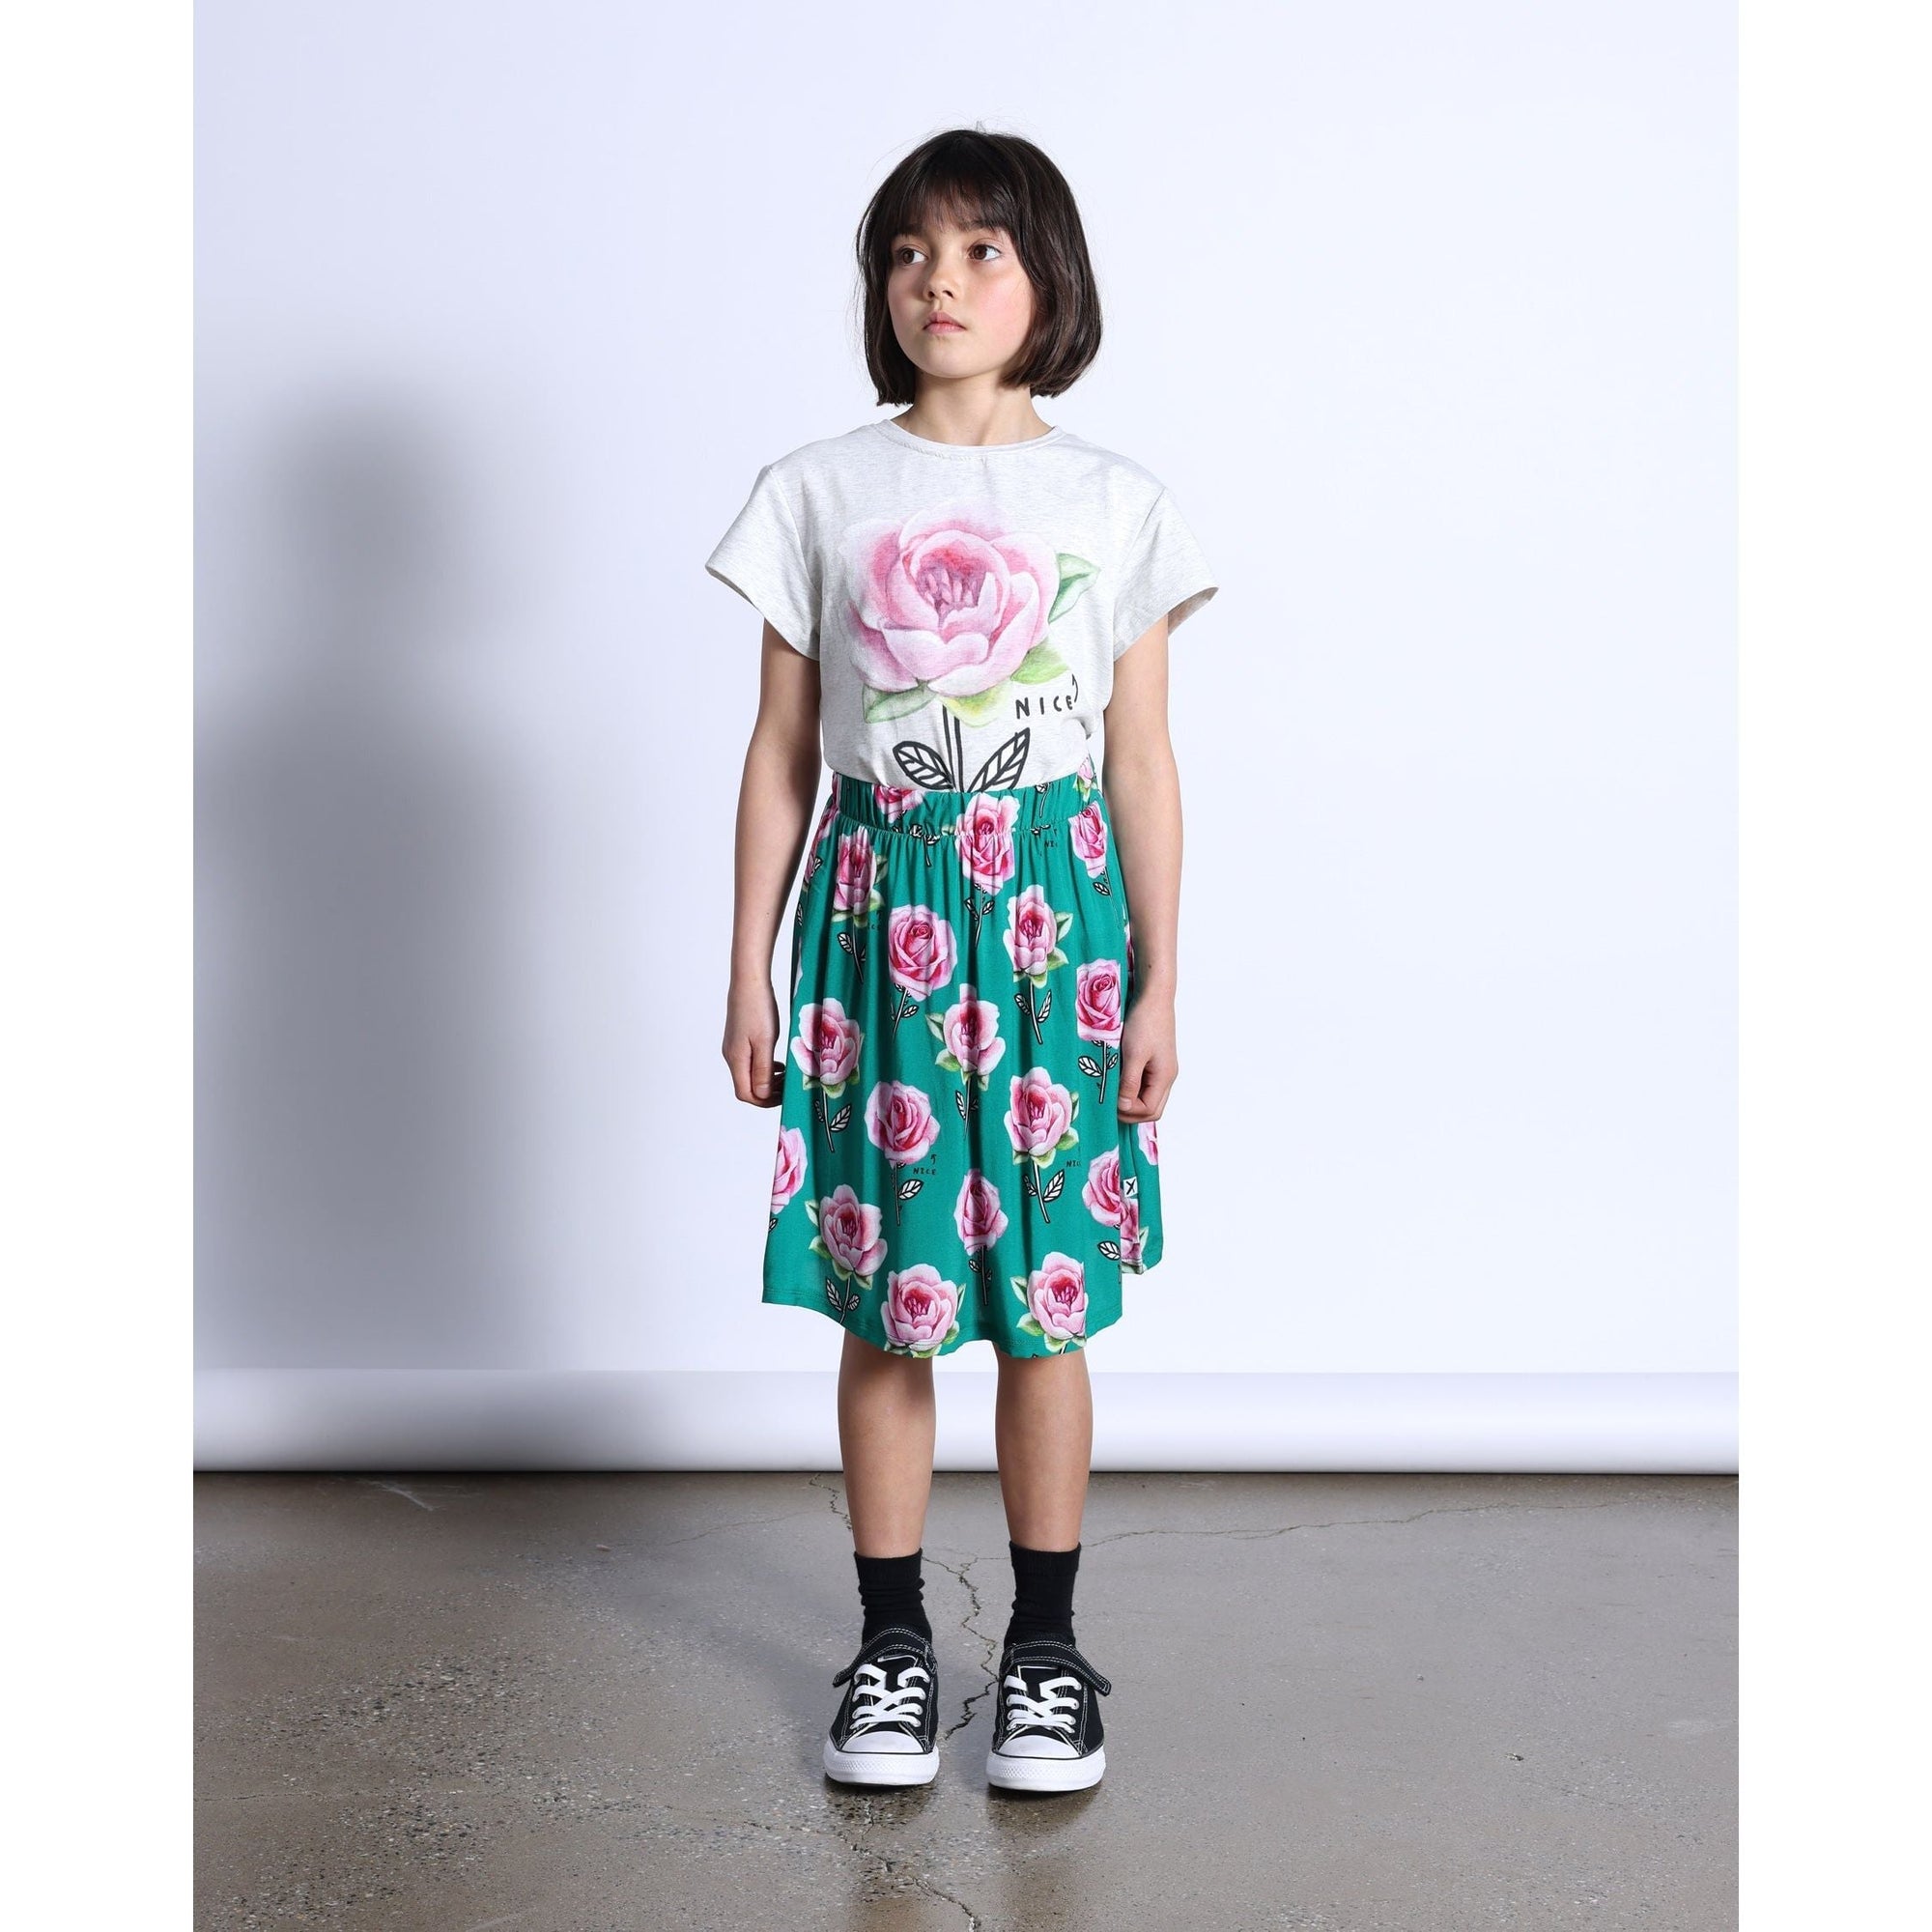 Nice Flowers Woven Skirt- Kelly Green